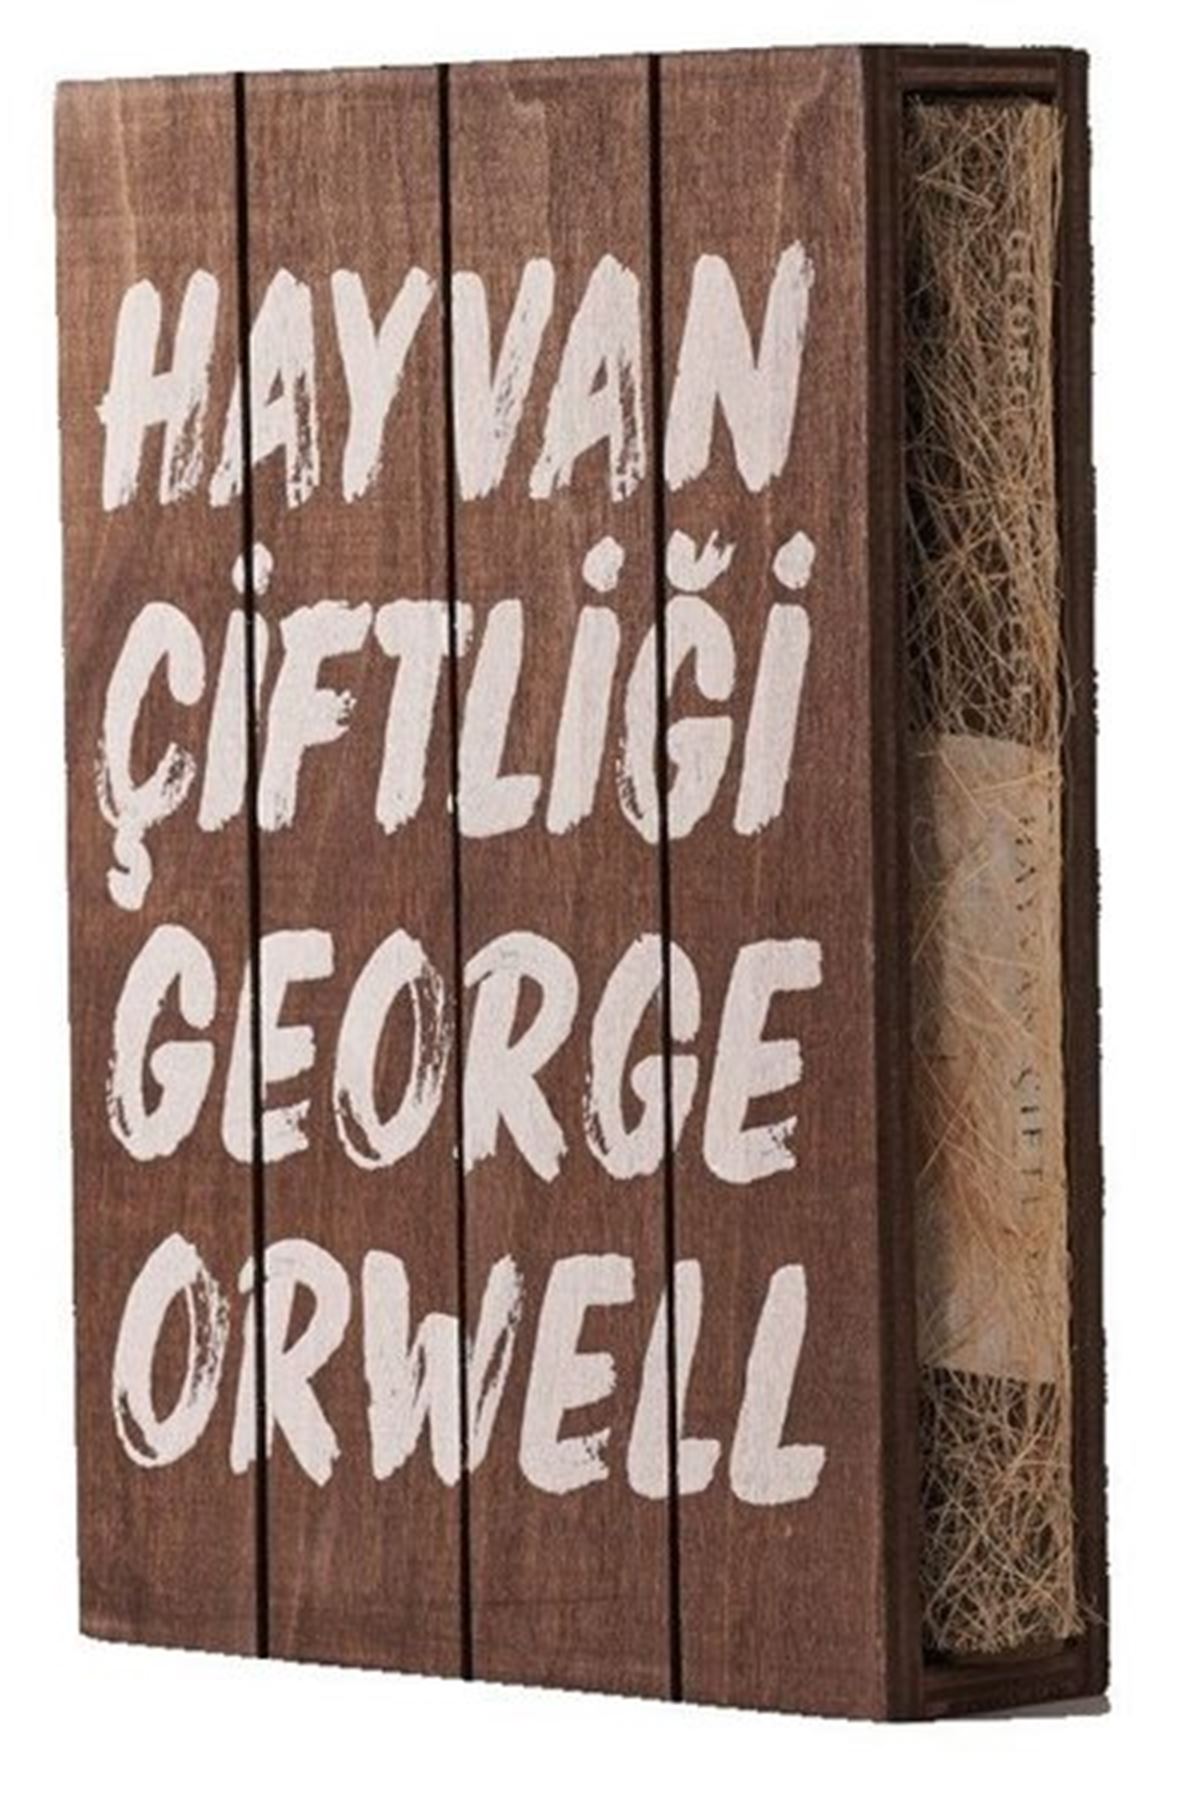 GEORGE ORWELL- HAYVAN ÇİFLİĞİ ÖZEL AHŞAP KUTULU ÖZEL CİLTLİ